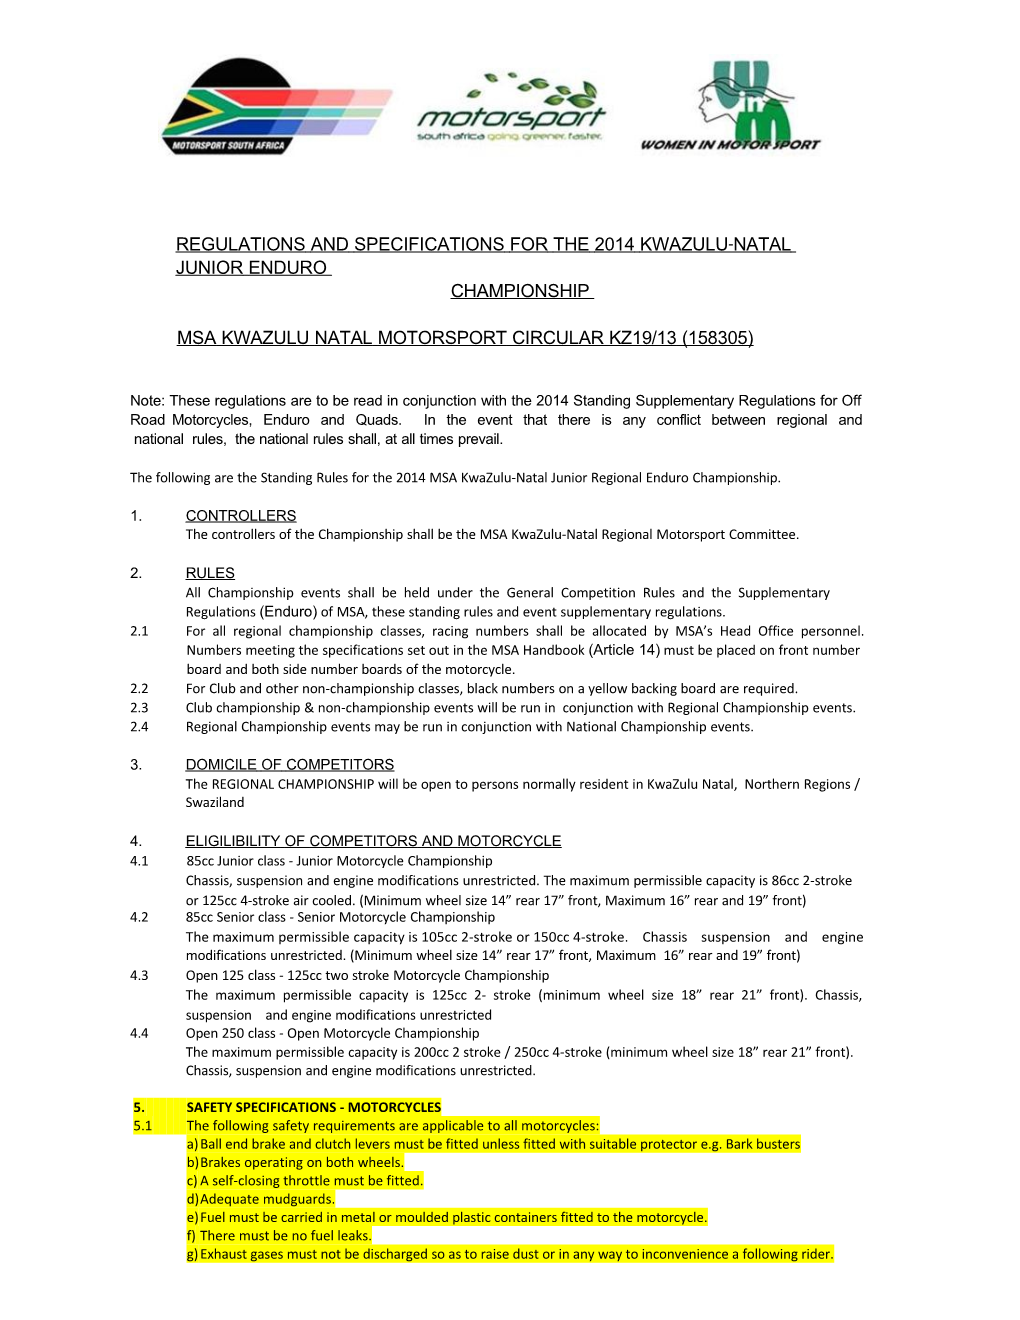 Regulationsandspecificationsforthe2014kwazulu Nataljuniorenduro Championship